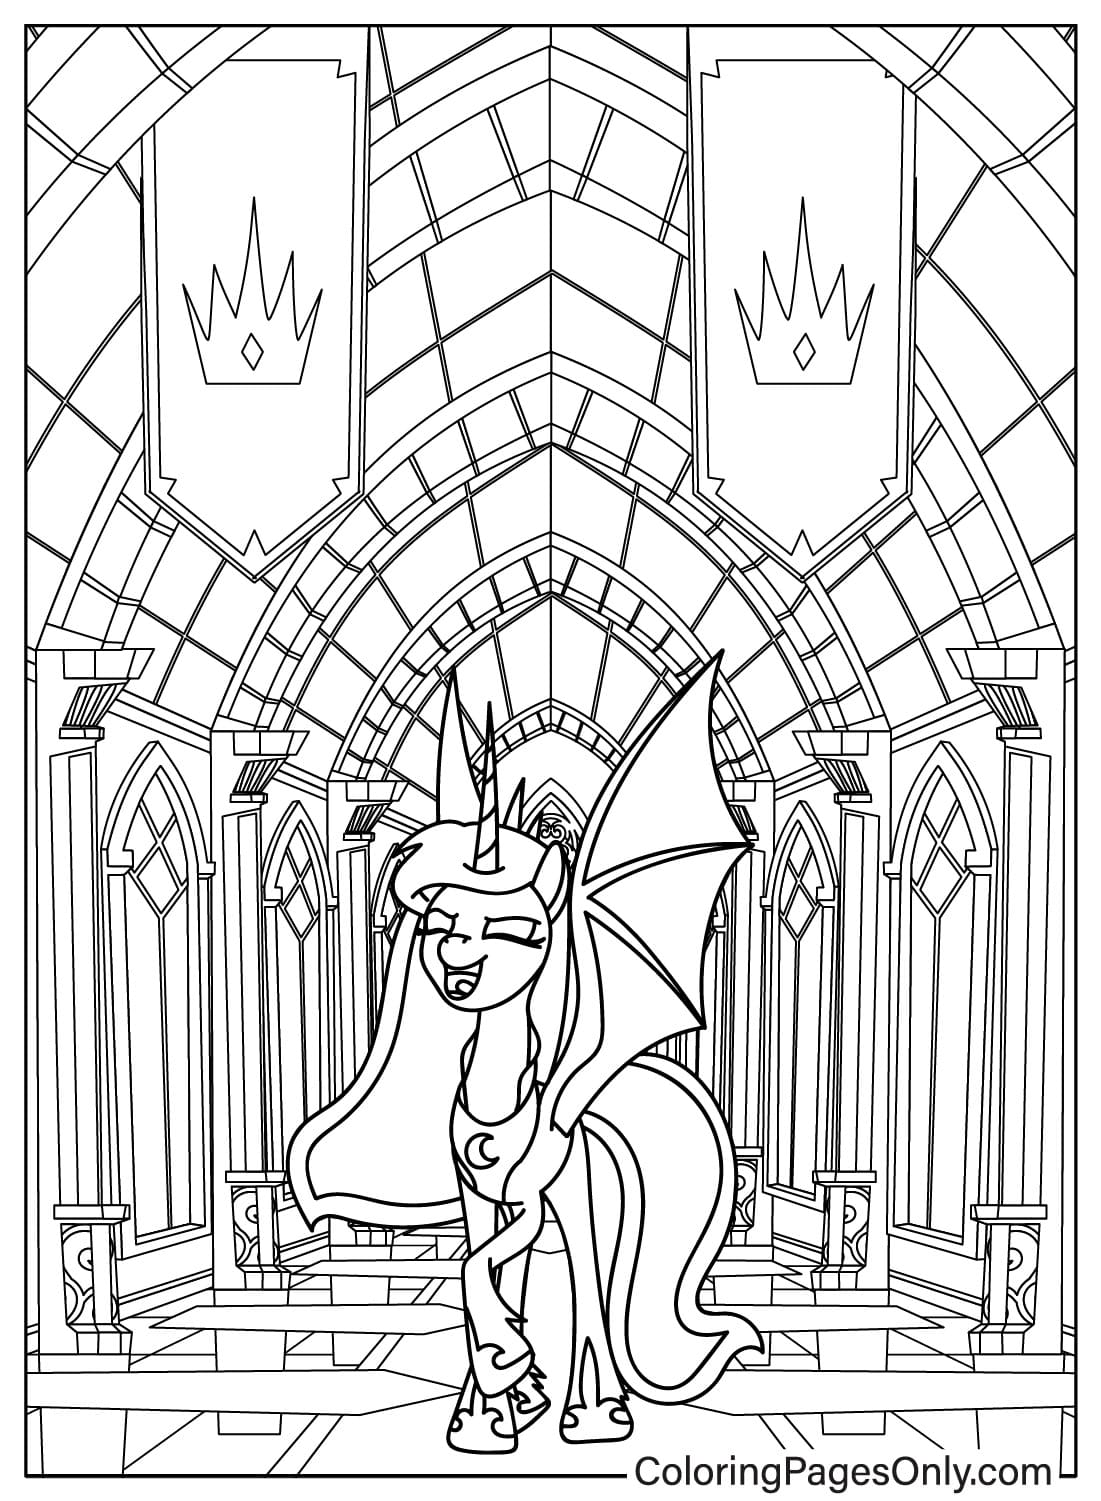 Princess Luna in the Palace Coloring Sheet from Princess Luna